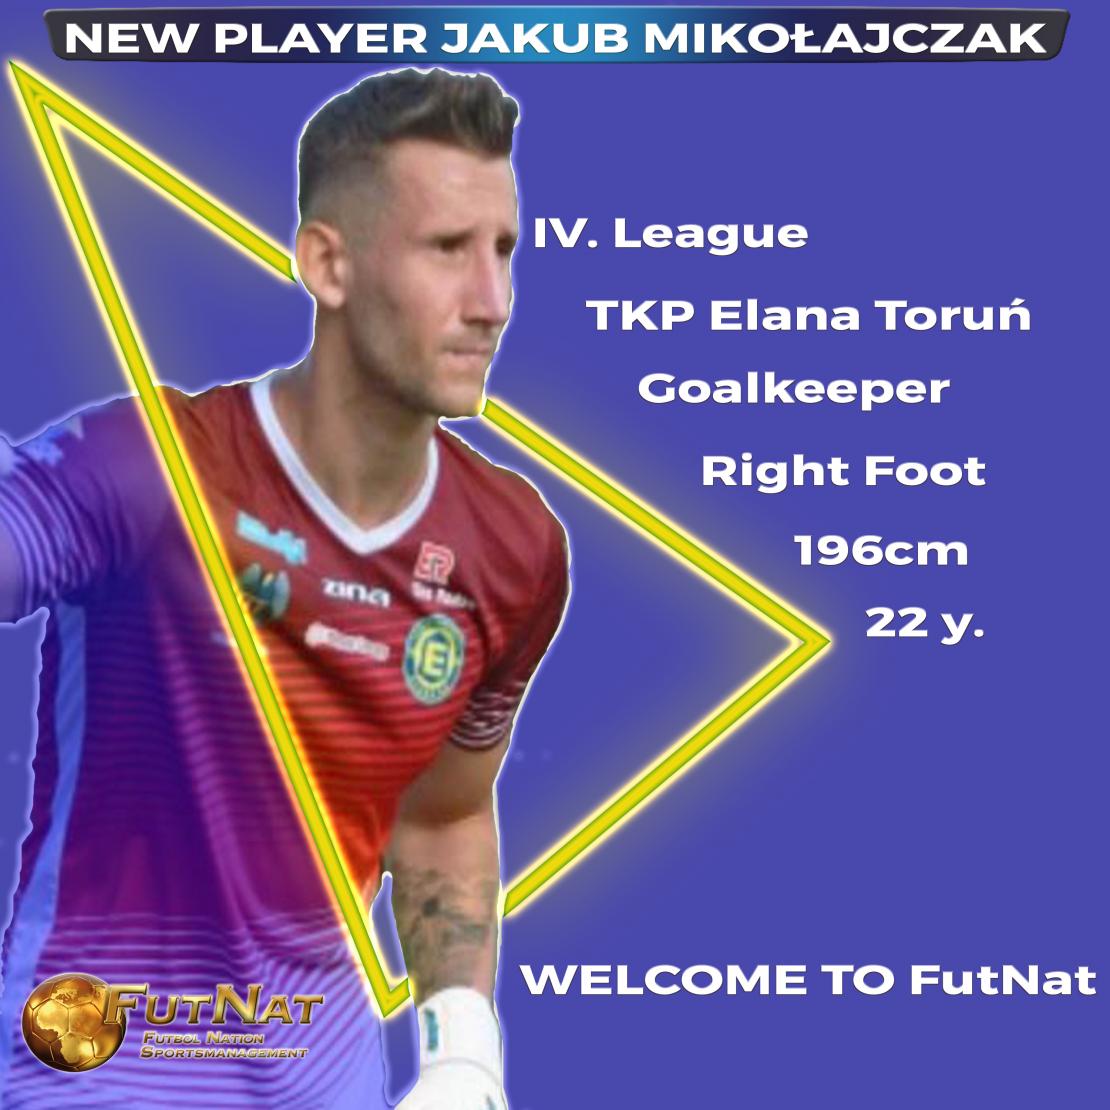 New player for FutNat: Jakub Mikołajczak 